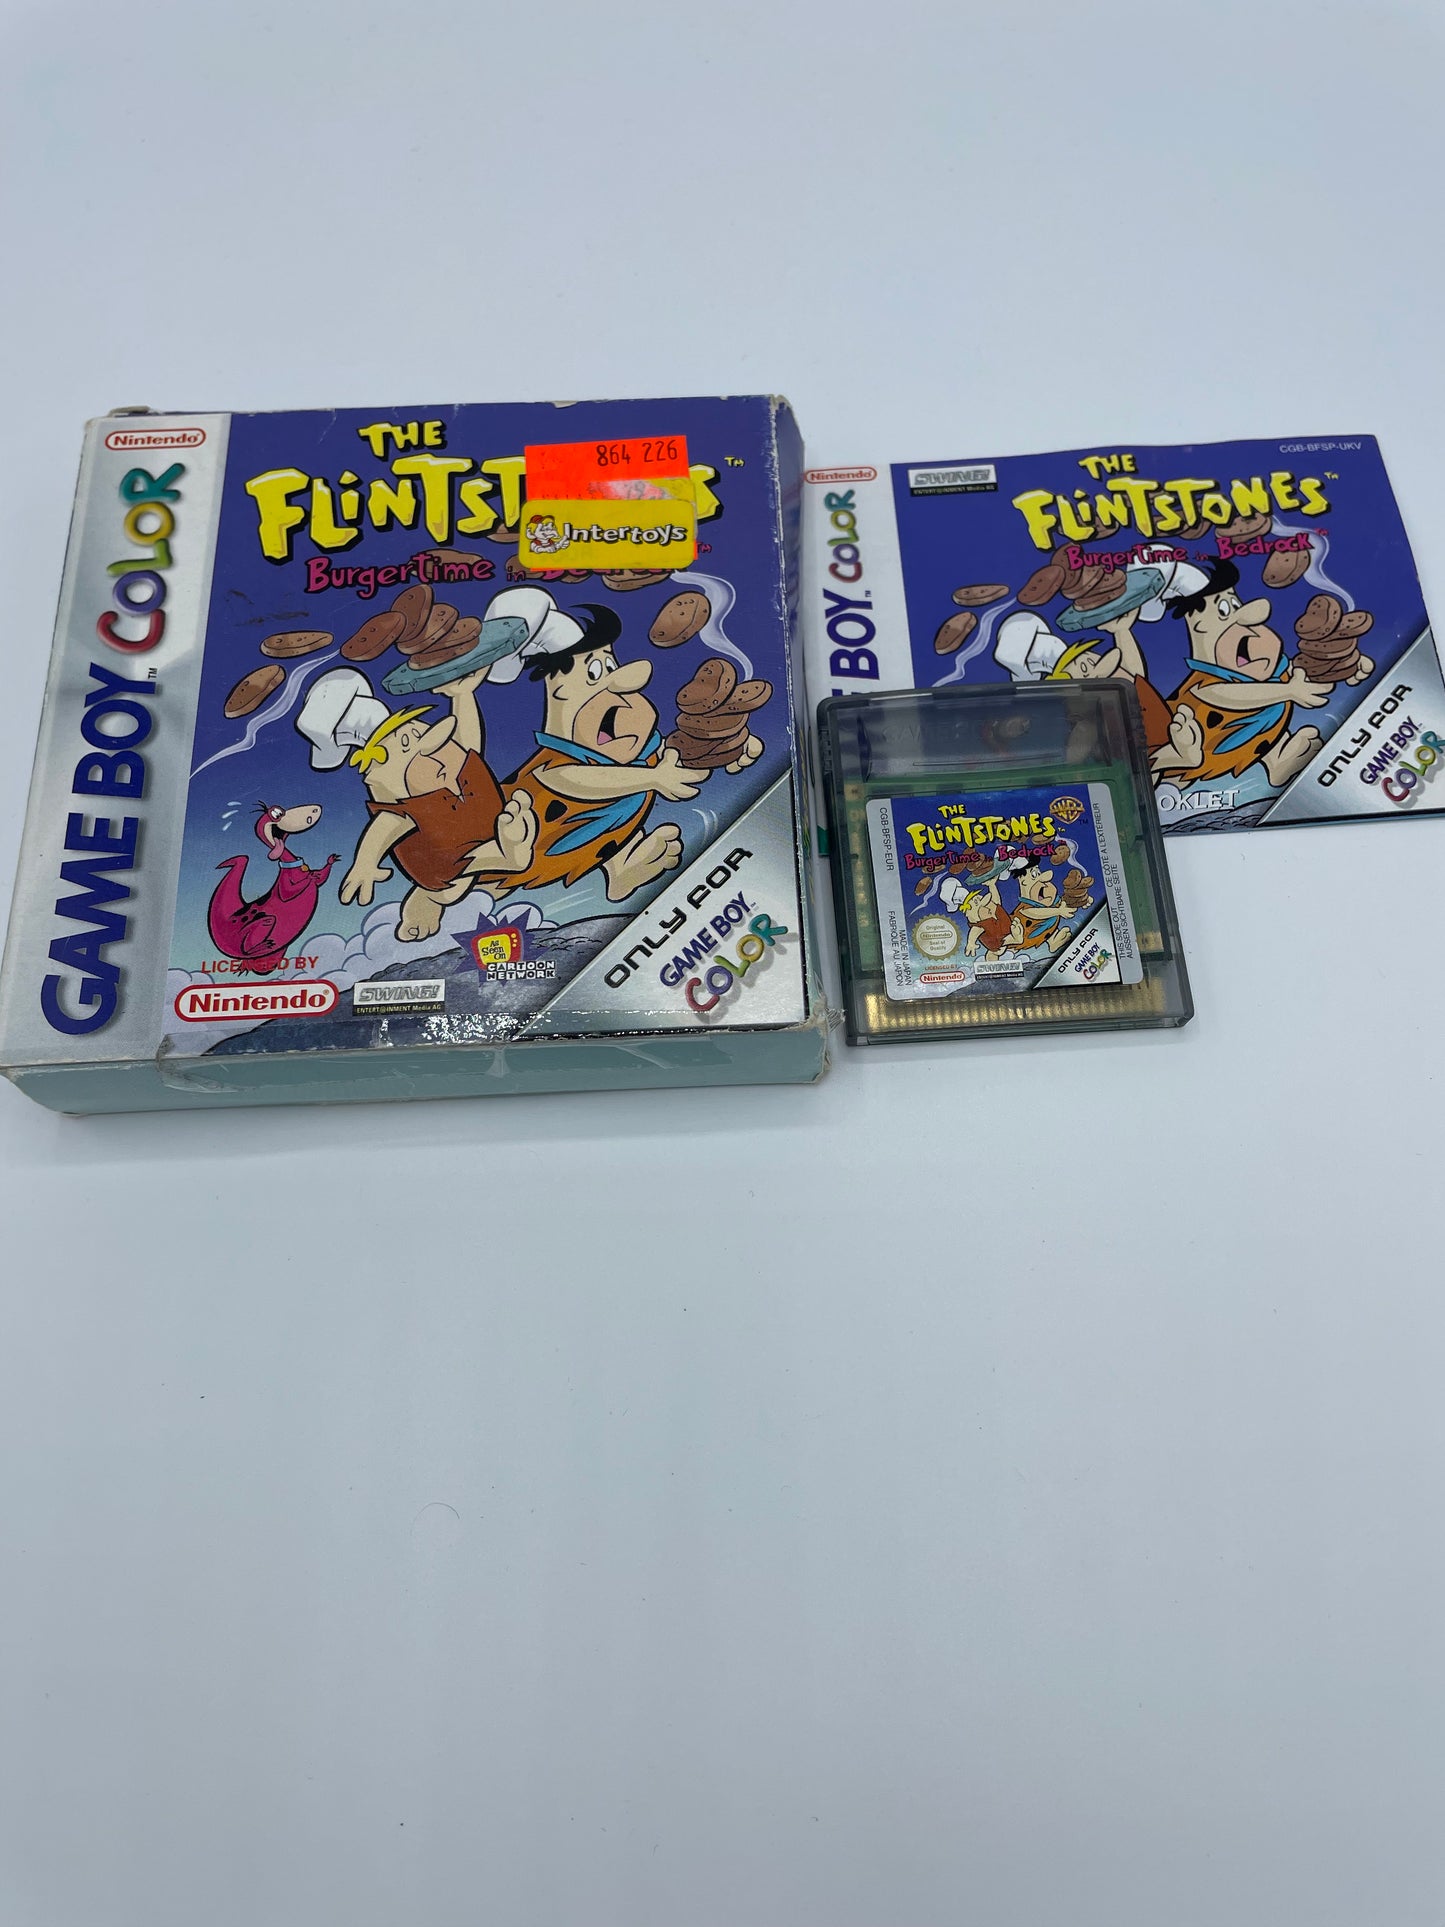 4x Game Boy Color Games - Pooh and tiger, the flintstones, dexter en Croc 2